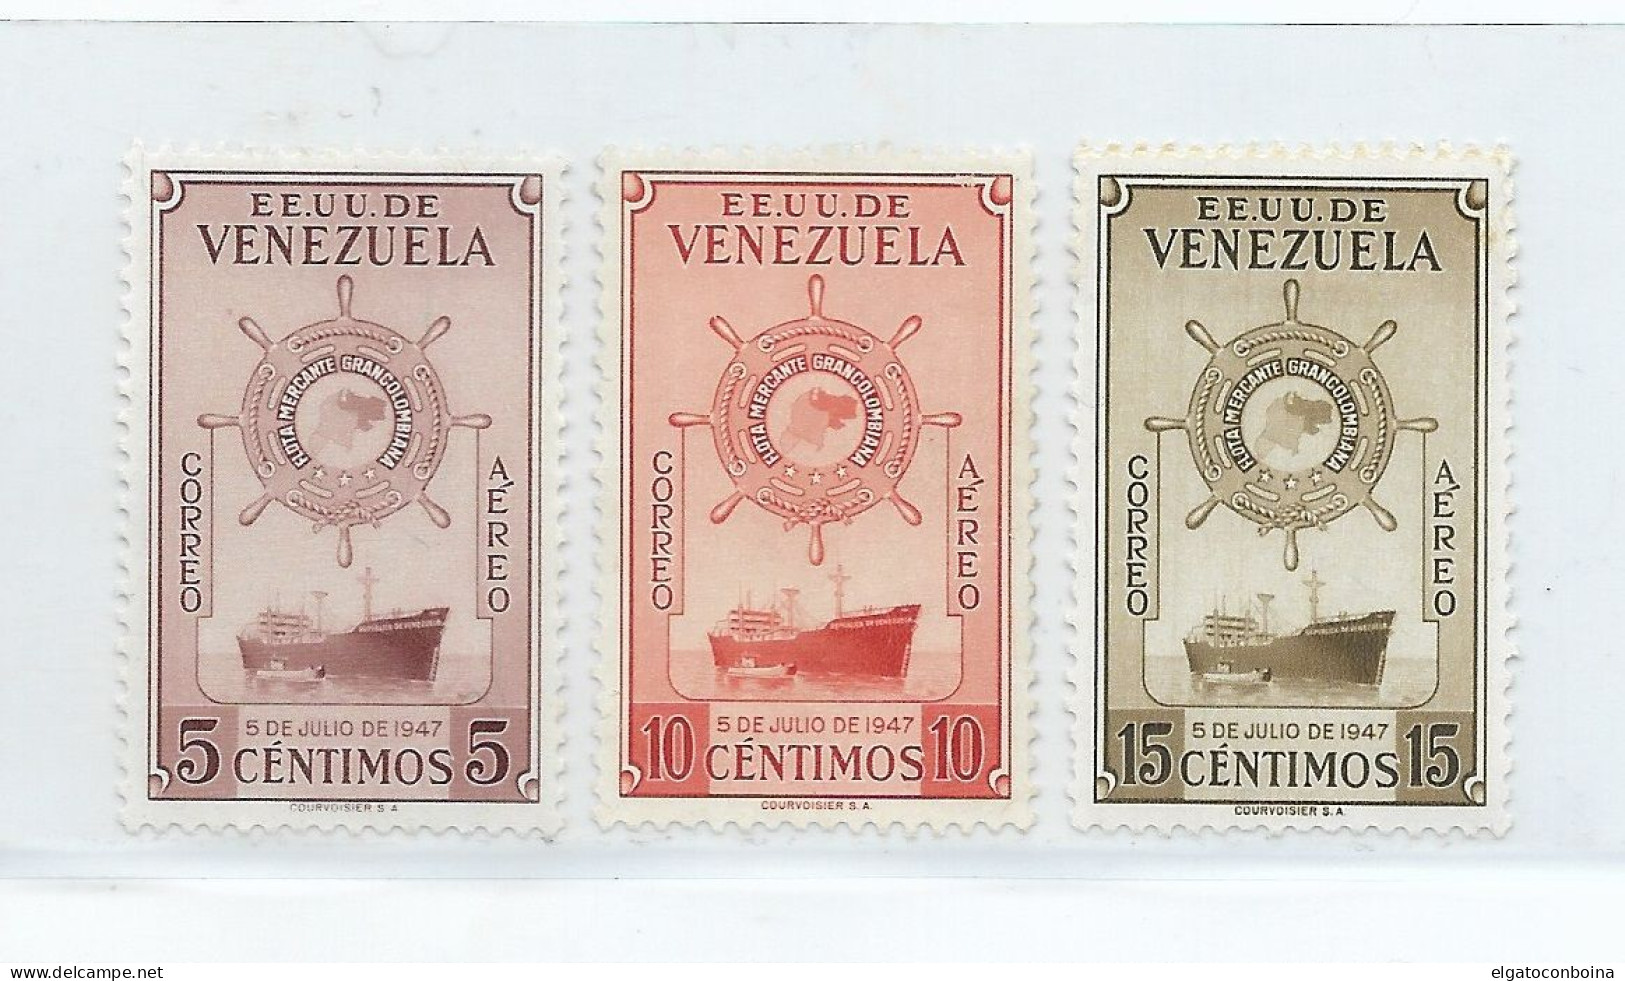 VENEZUELA 1952 REDRAWN COIL STAMPS COURVOISIER SET OF 3 MINT HINGED - Venezuela